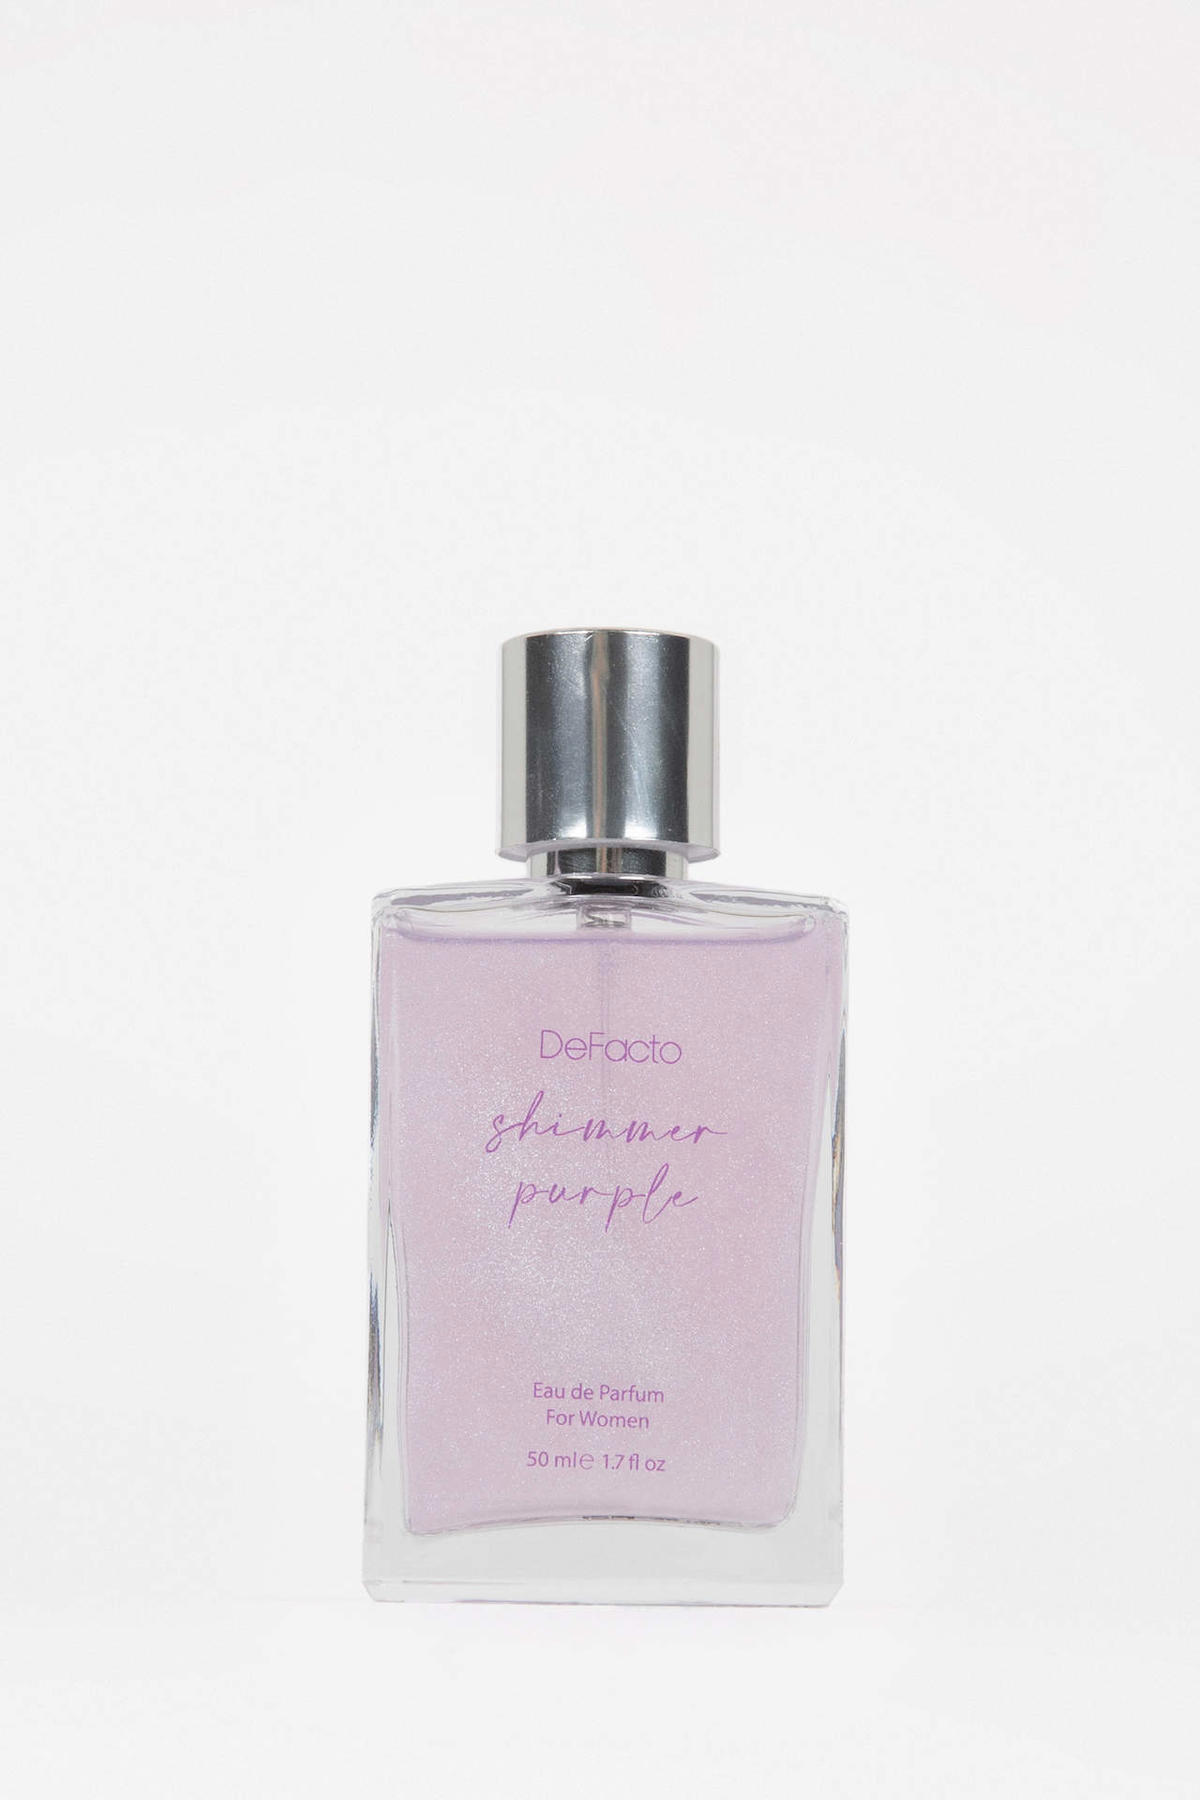 Defacto Shimmer Purple EDP Turunçgil Kadın Parfüm 50 ml